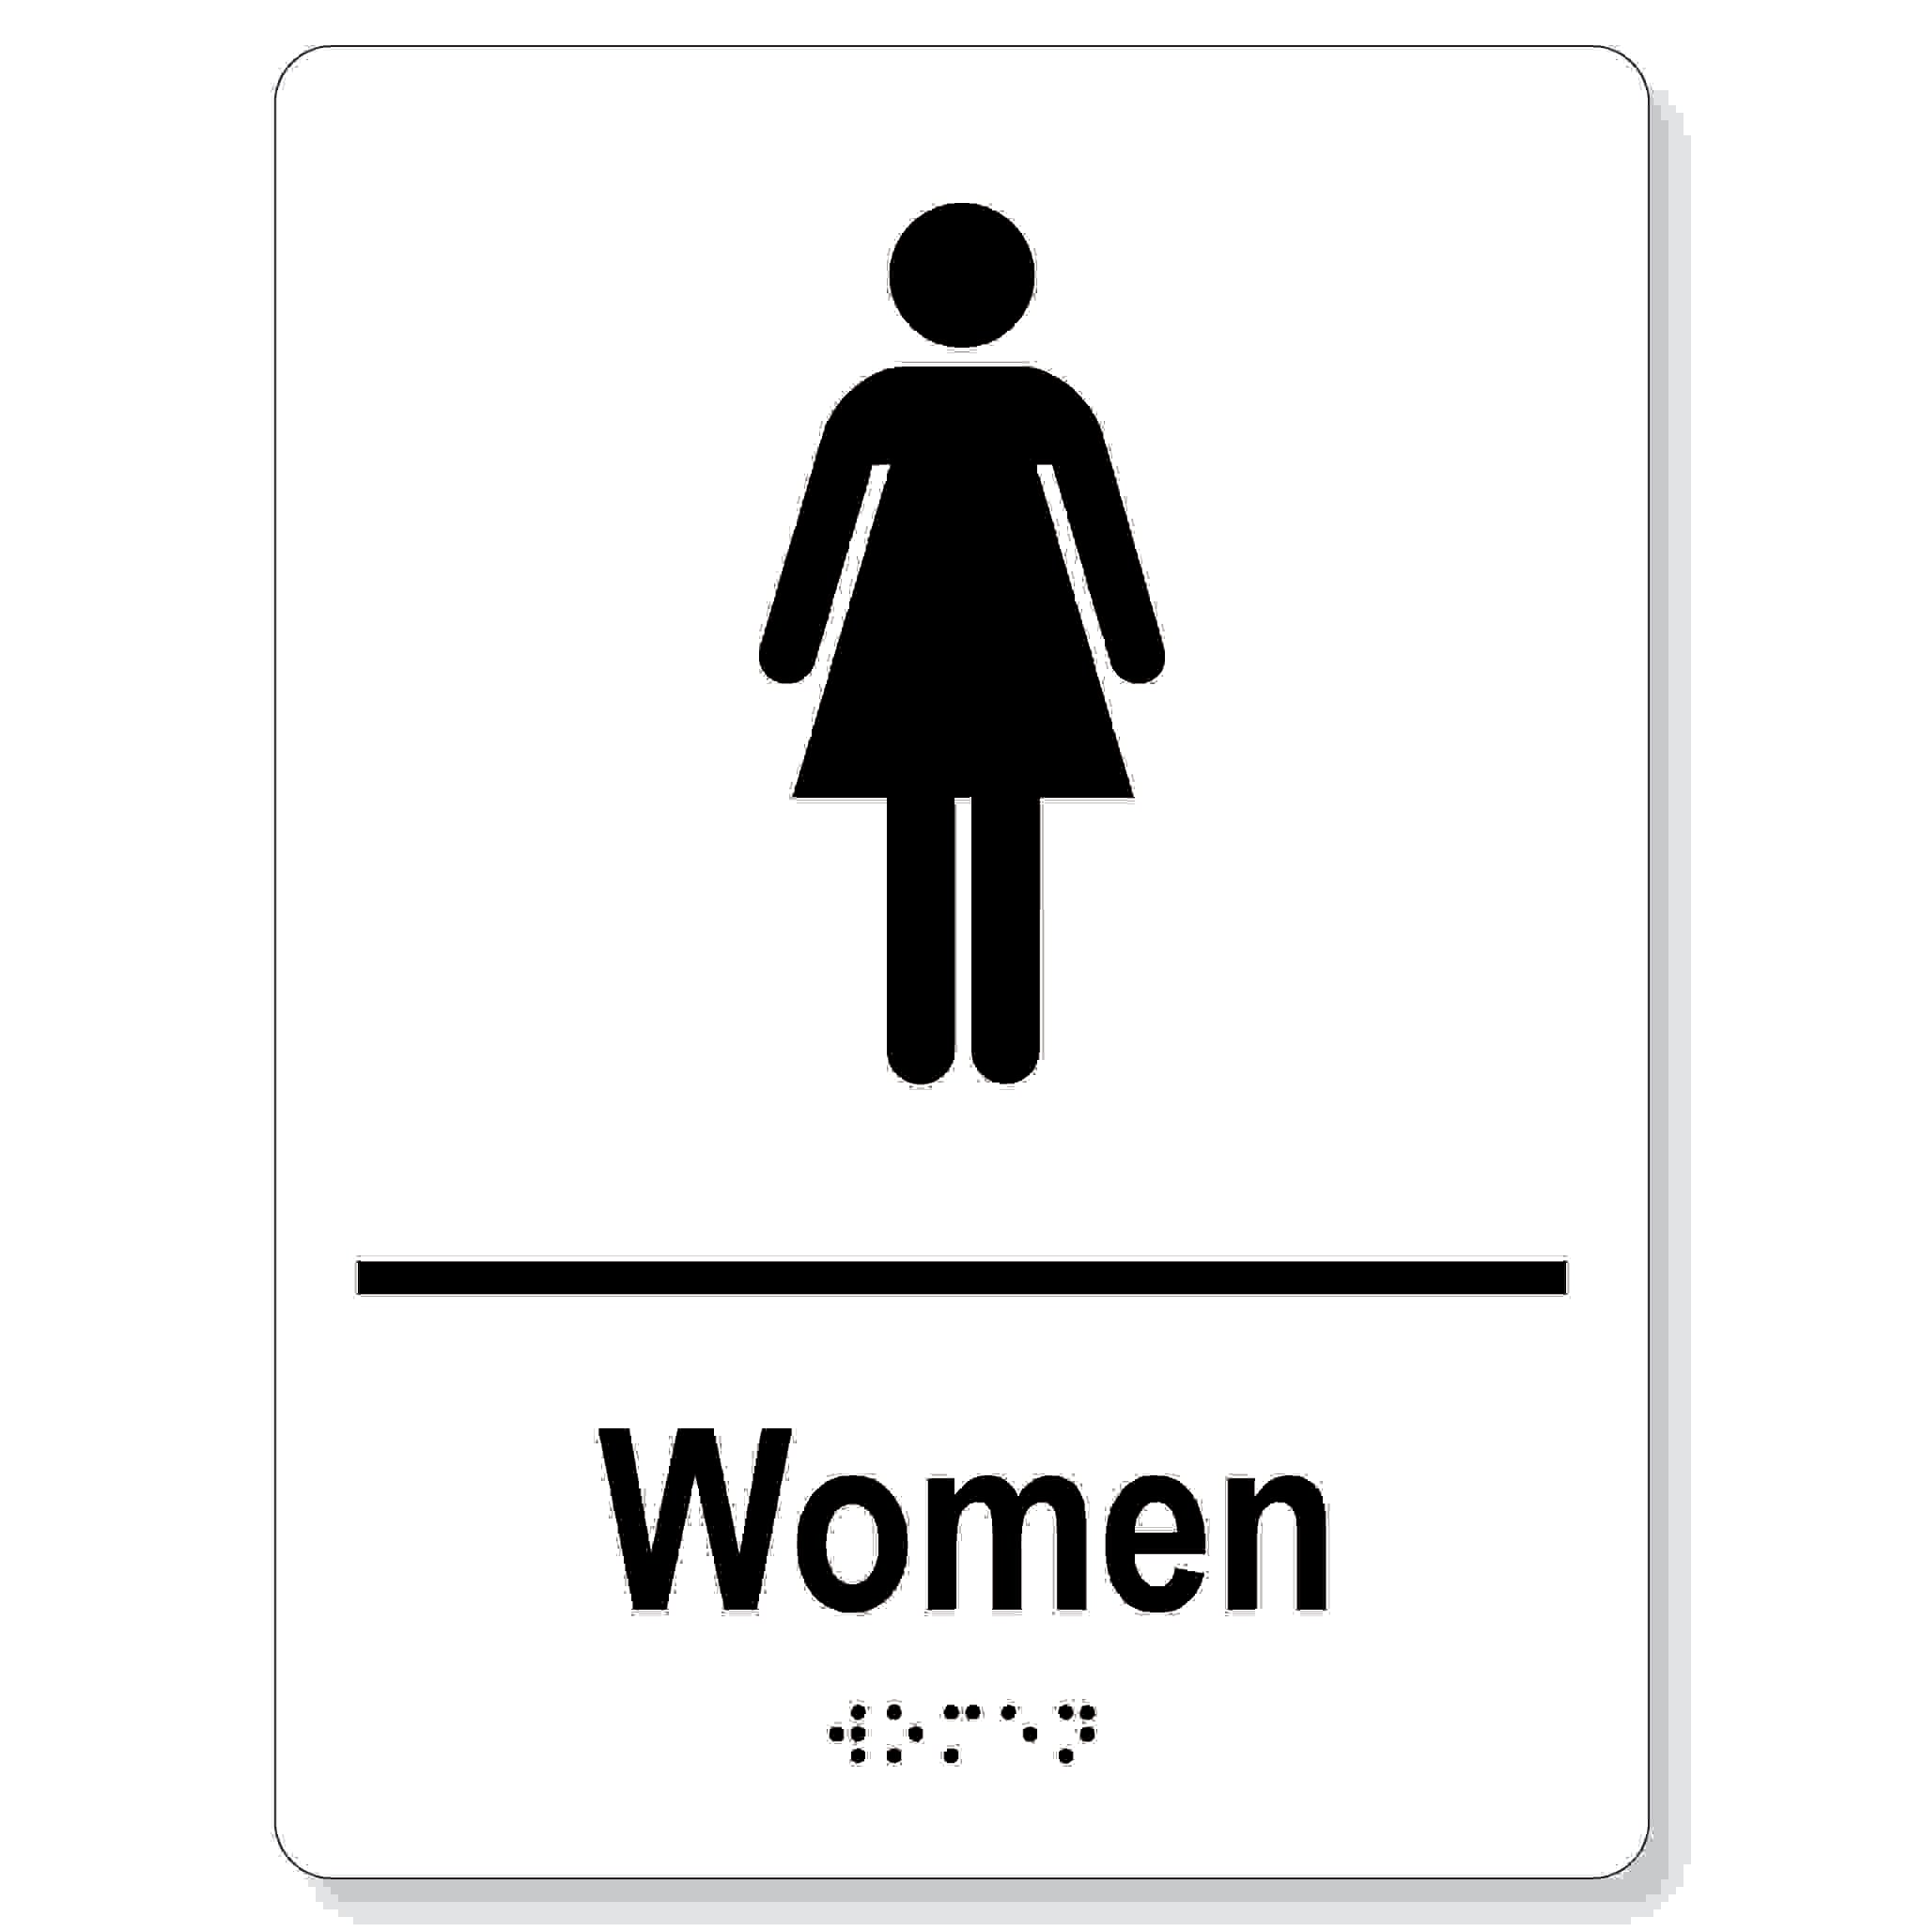 Women washroom sign